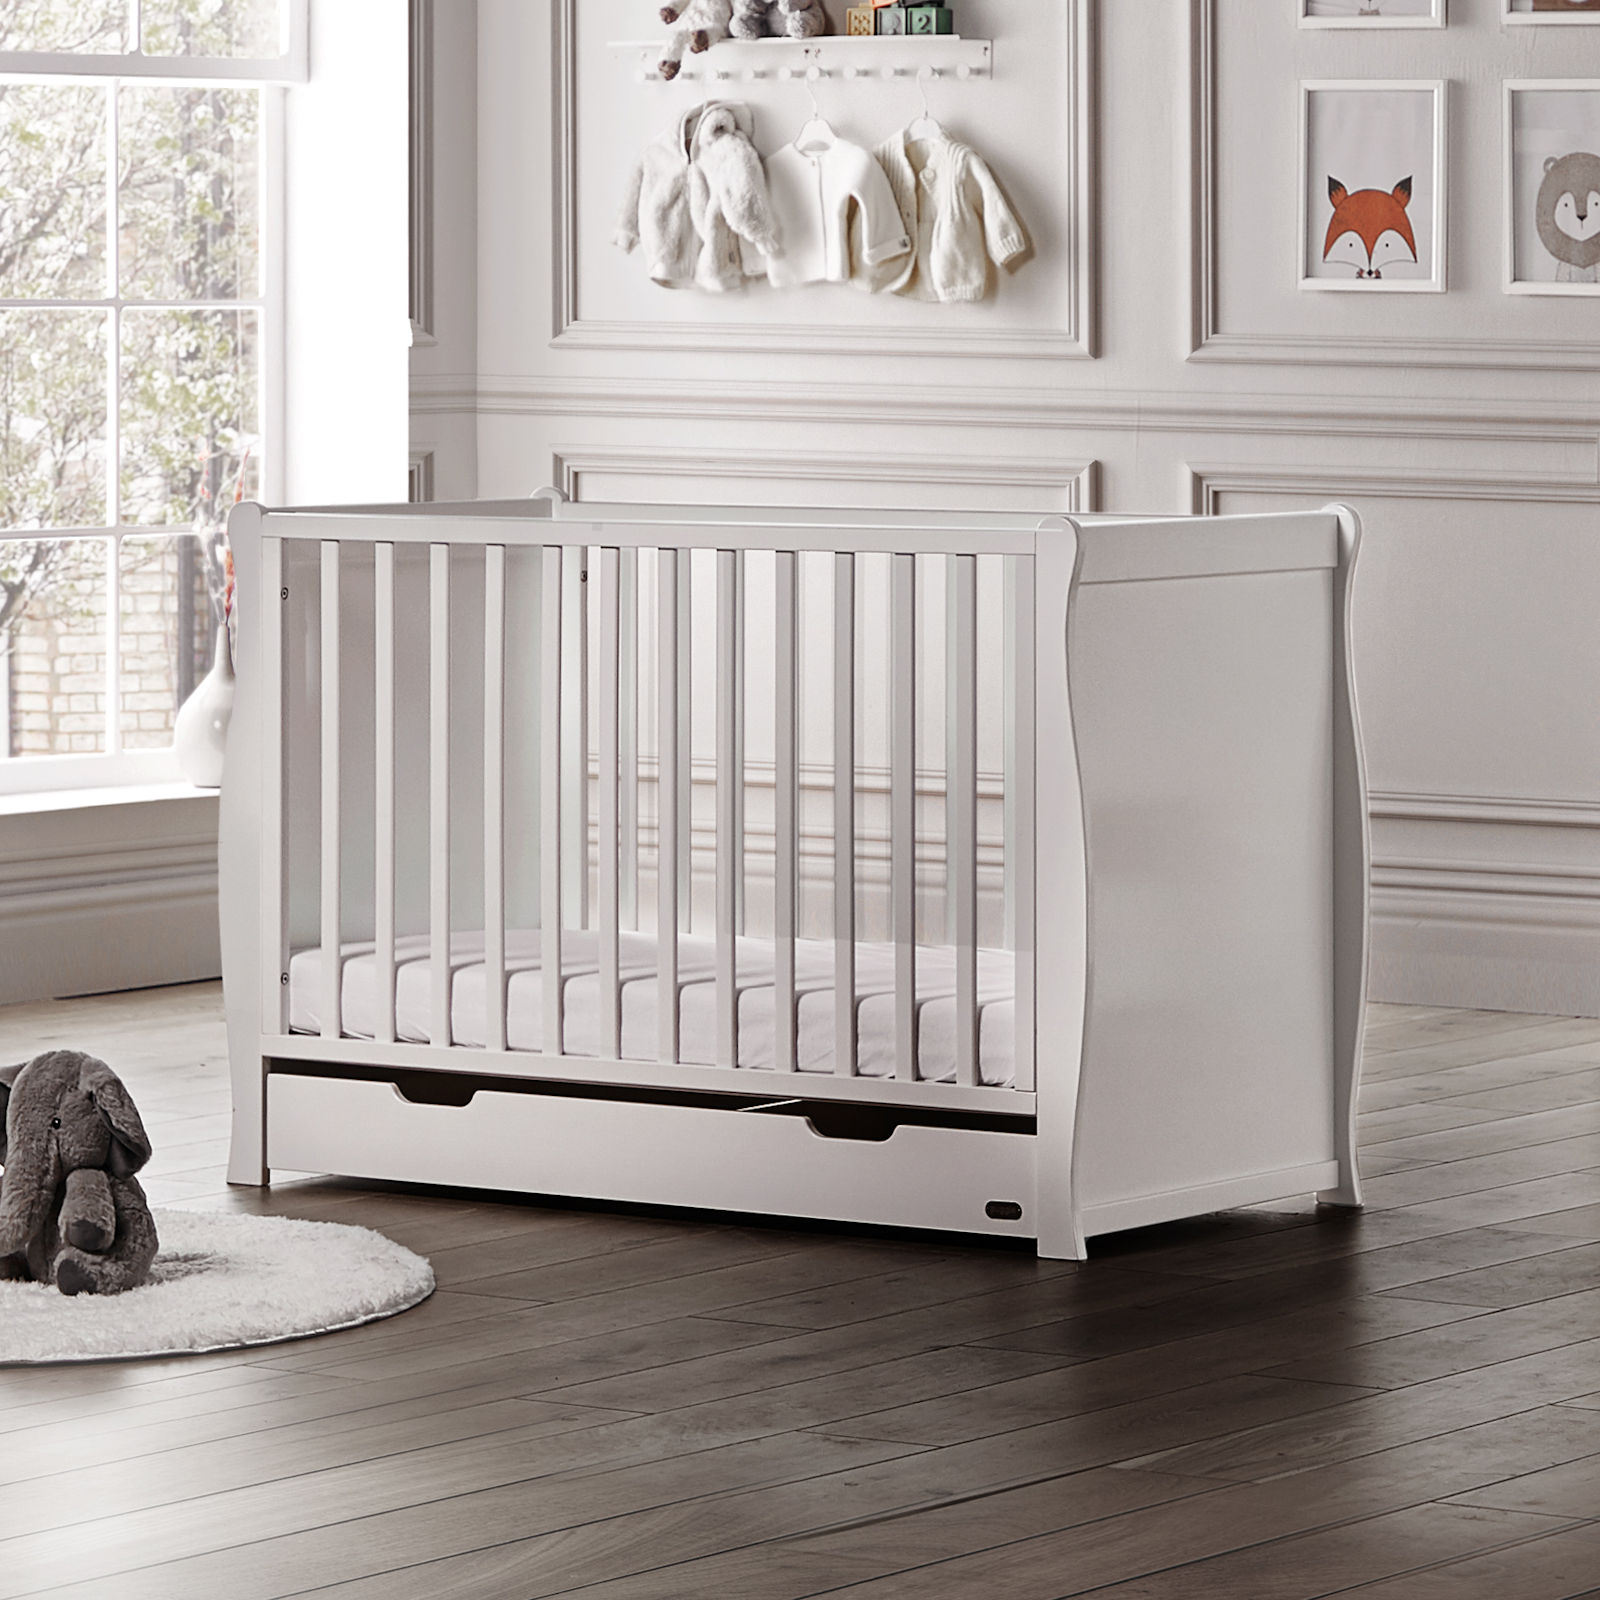 Puggle Sleigh Cot 3pc Nursery Furniture Set with Drawer & Maxi Air Cool Mattress - White